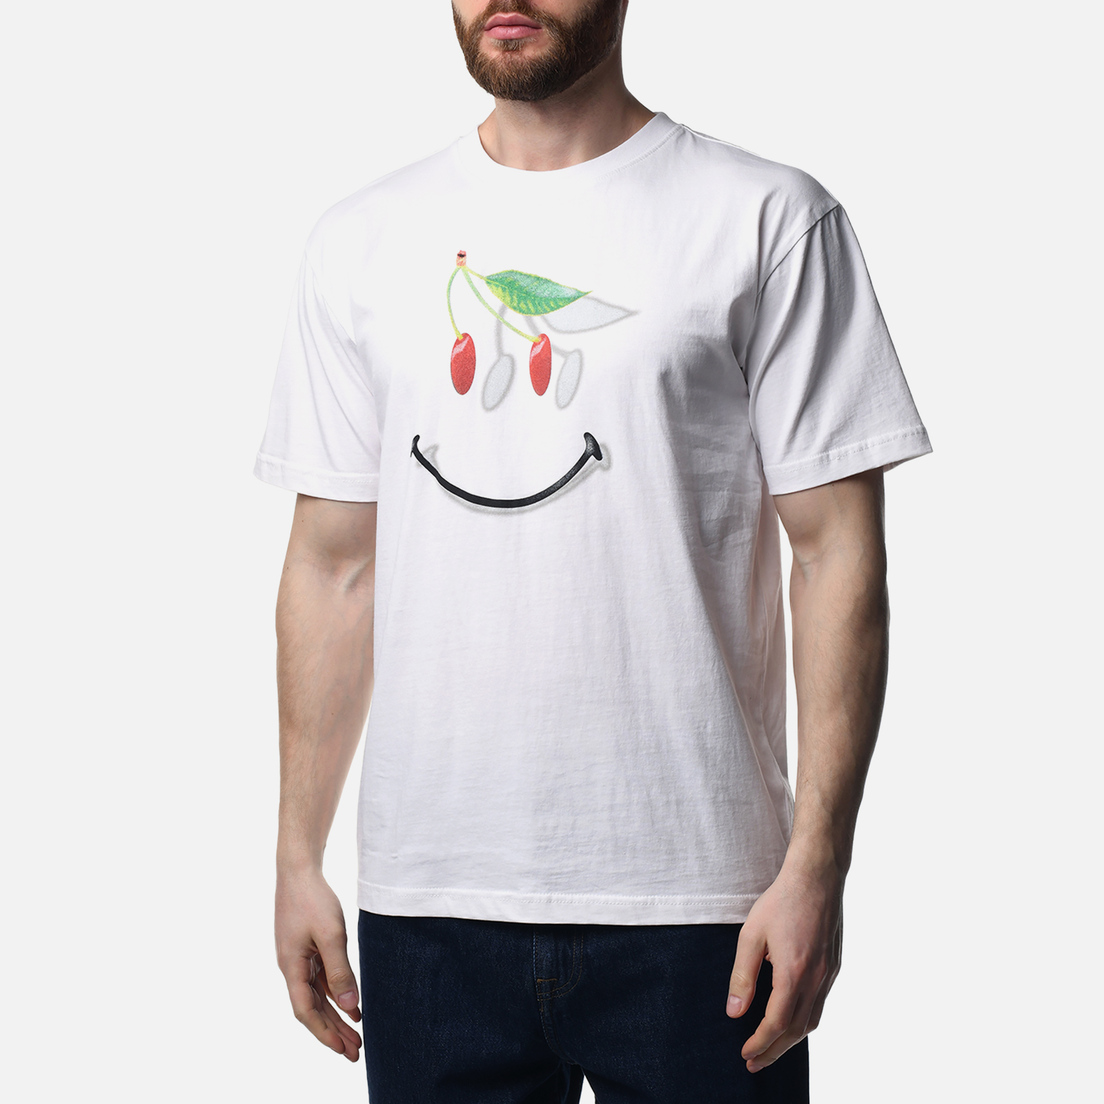 MARKET Мужская футболка Smiley Ripe